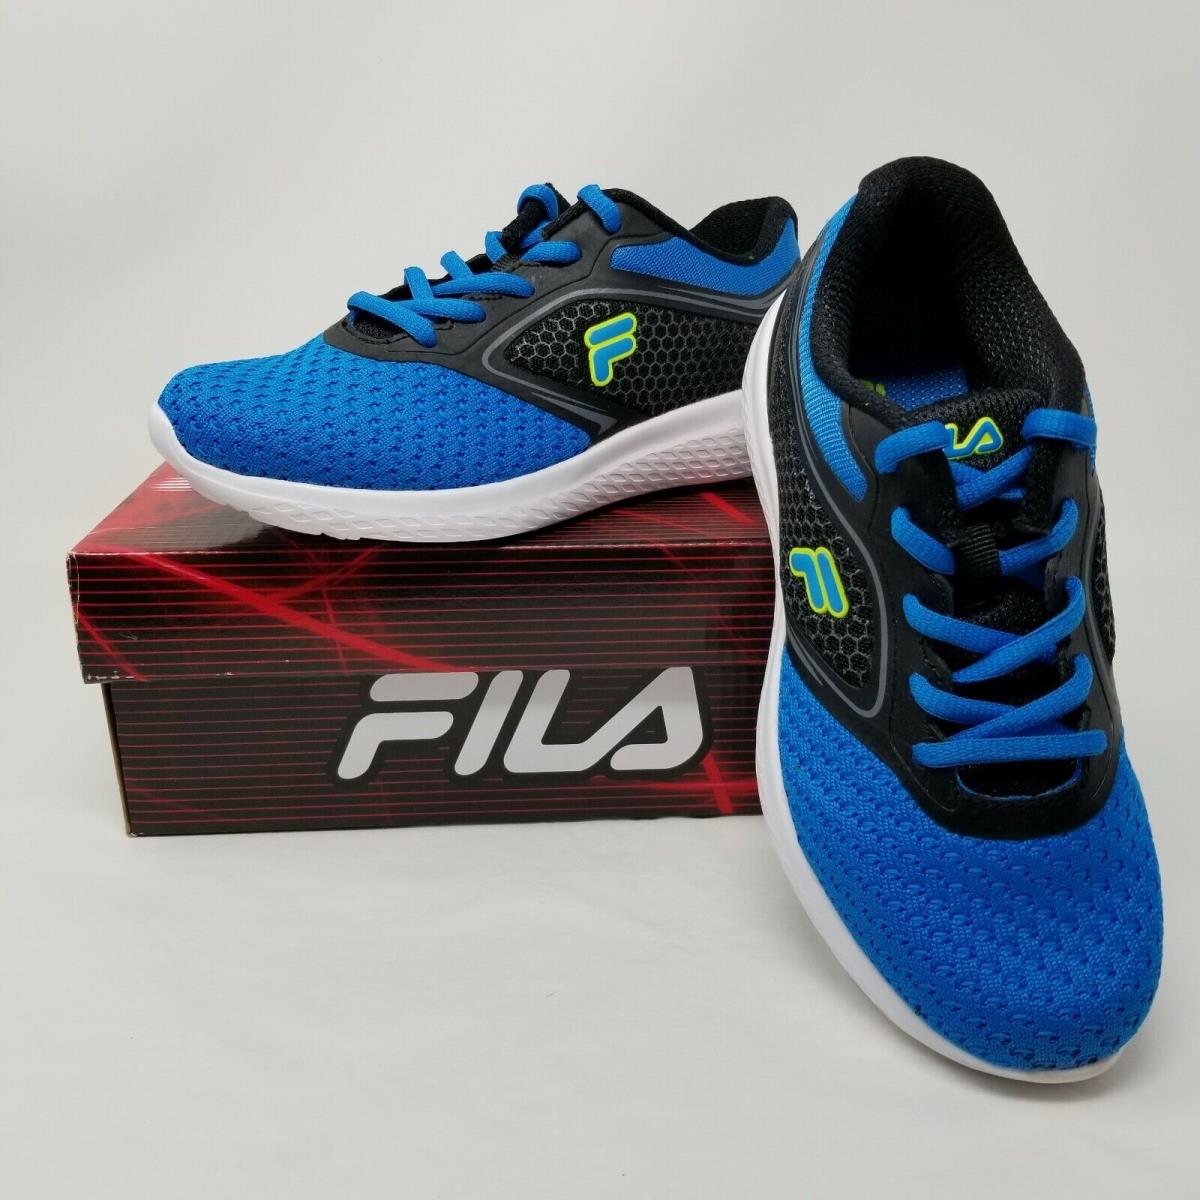 Fila Unisex Kids Blue Black Sendoff 6 Low Top Lace Up Athletic Running Shoes 3